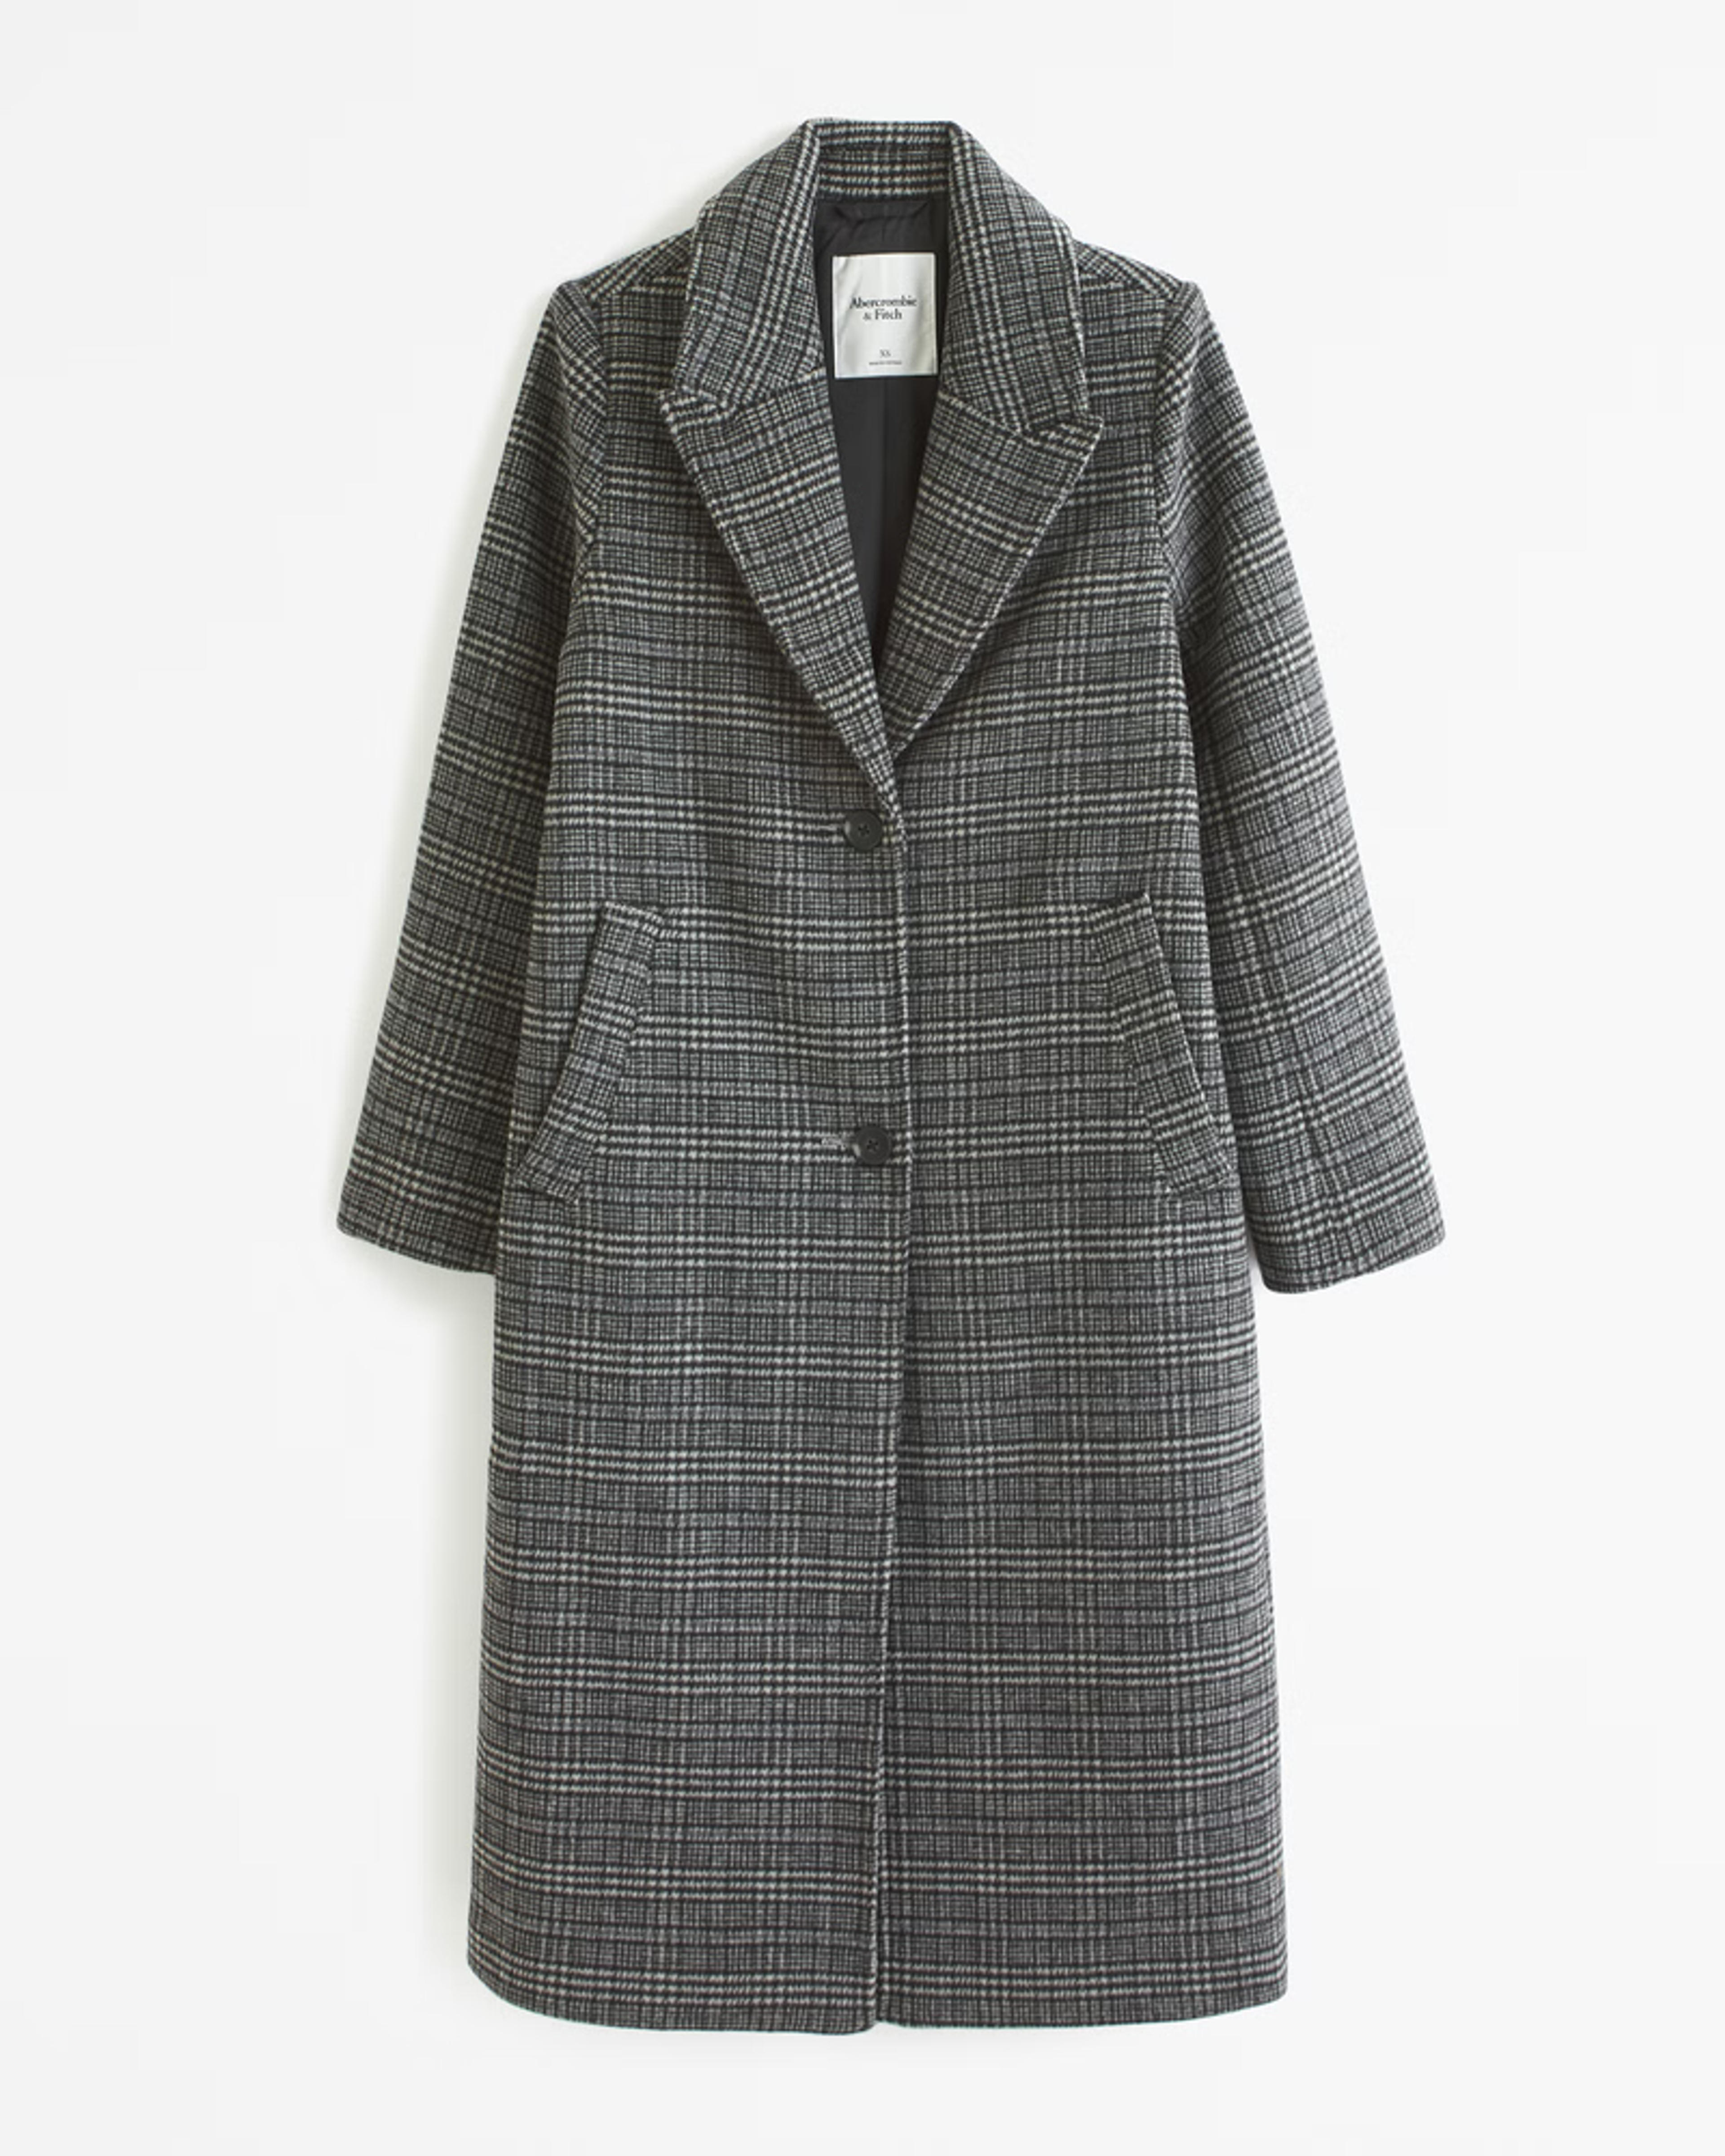 Women's Wool-Blend Tailored Topcoat | Women's Coats & Jackets | Abercrombie.com